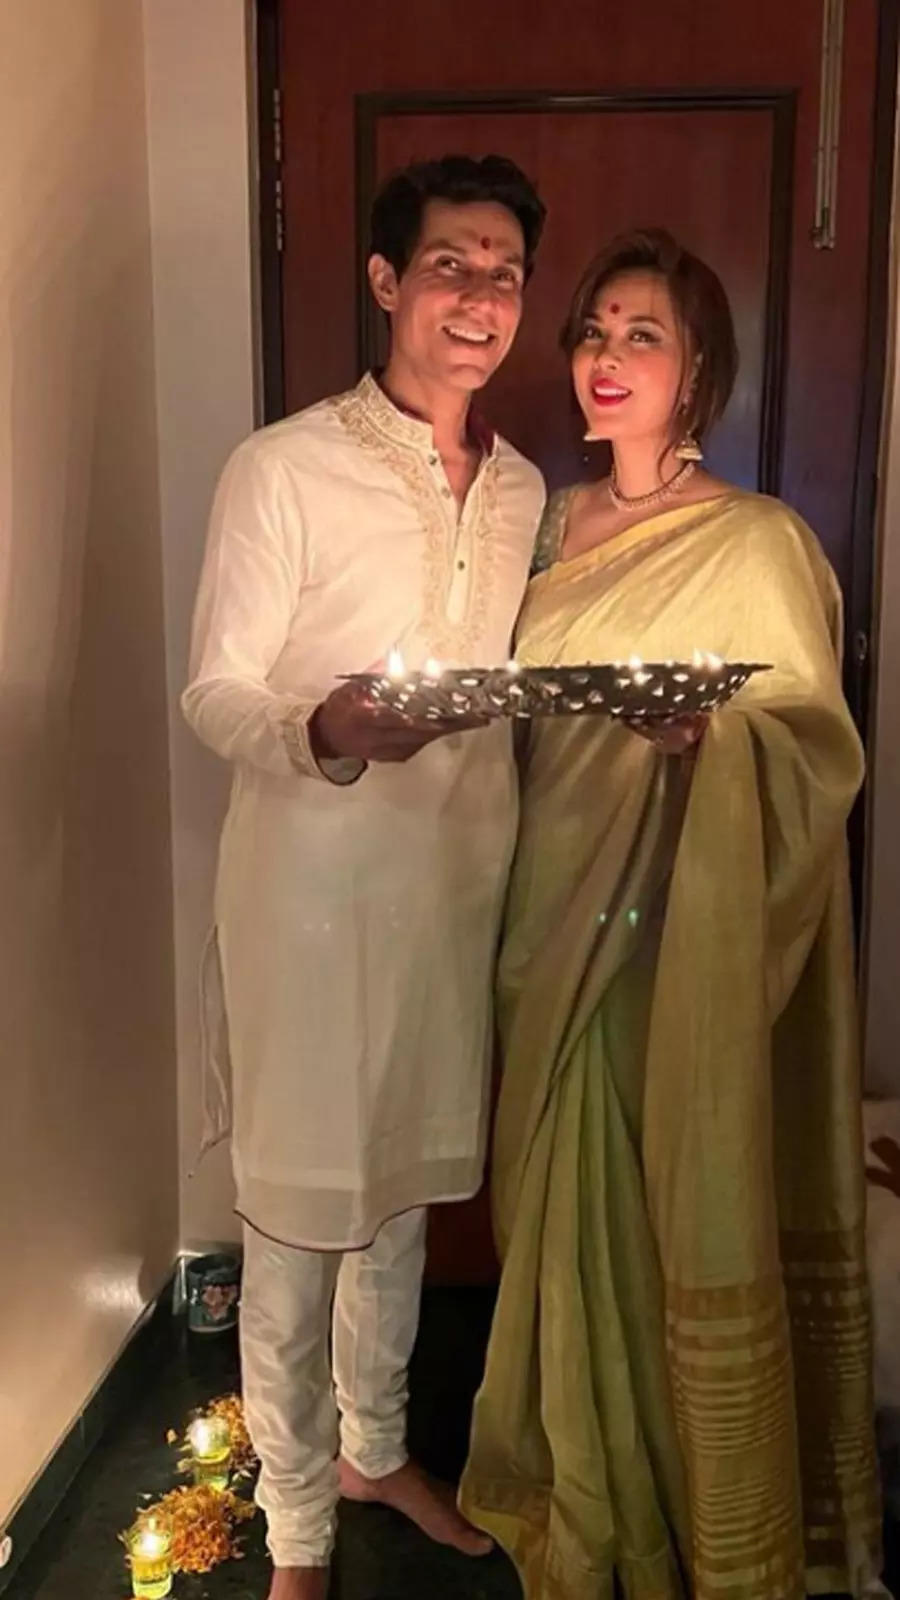 Meet Lin Laisharam: The woman marrying Randeep Hooda this November